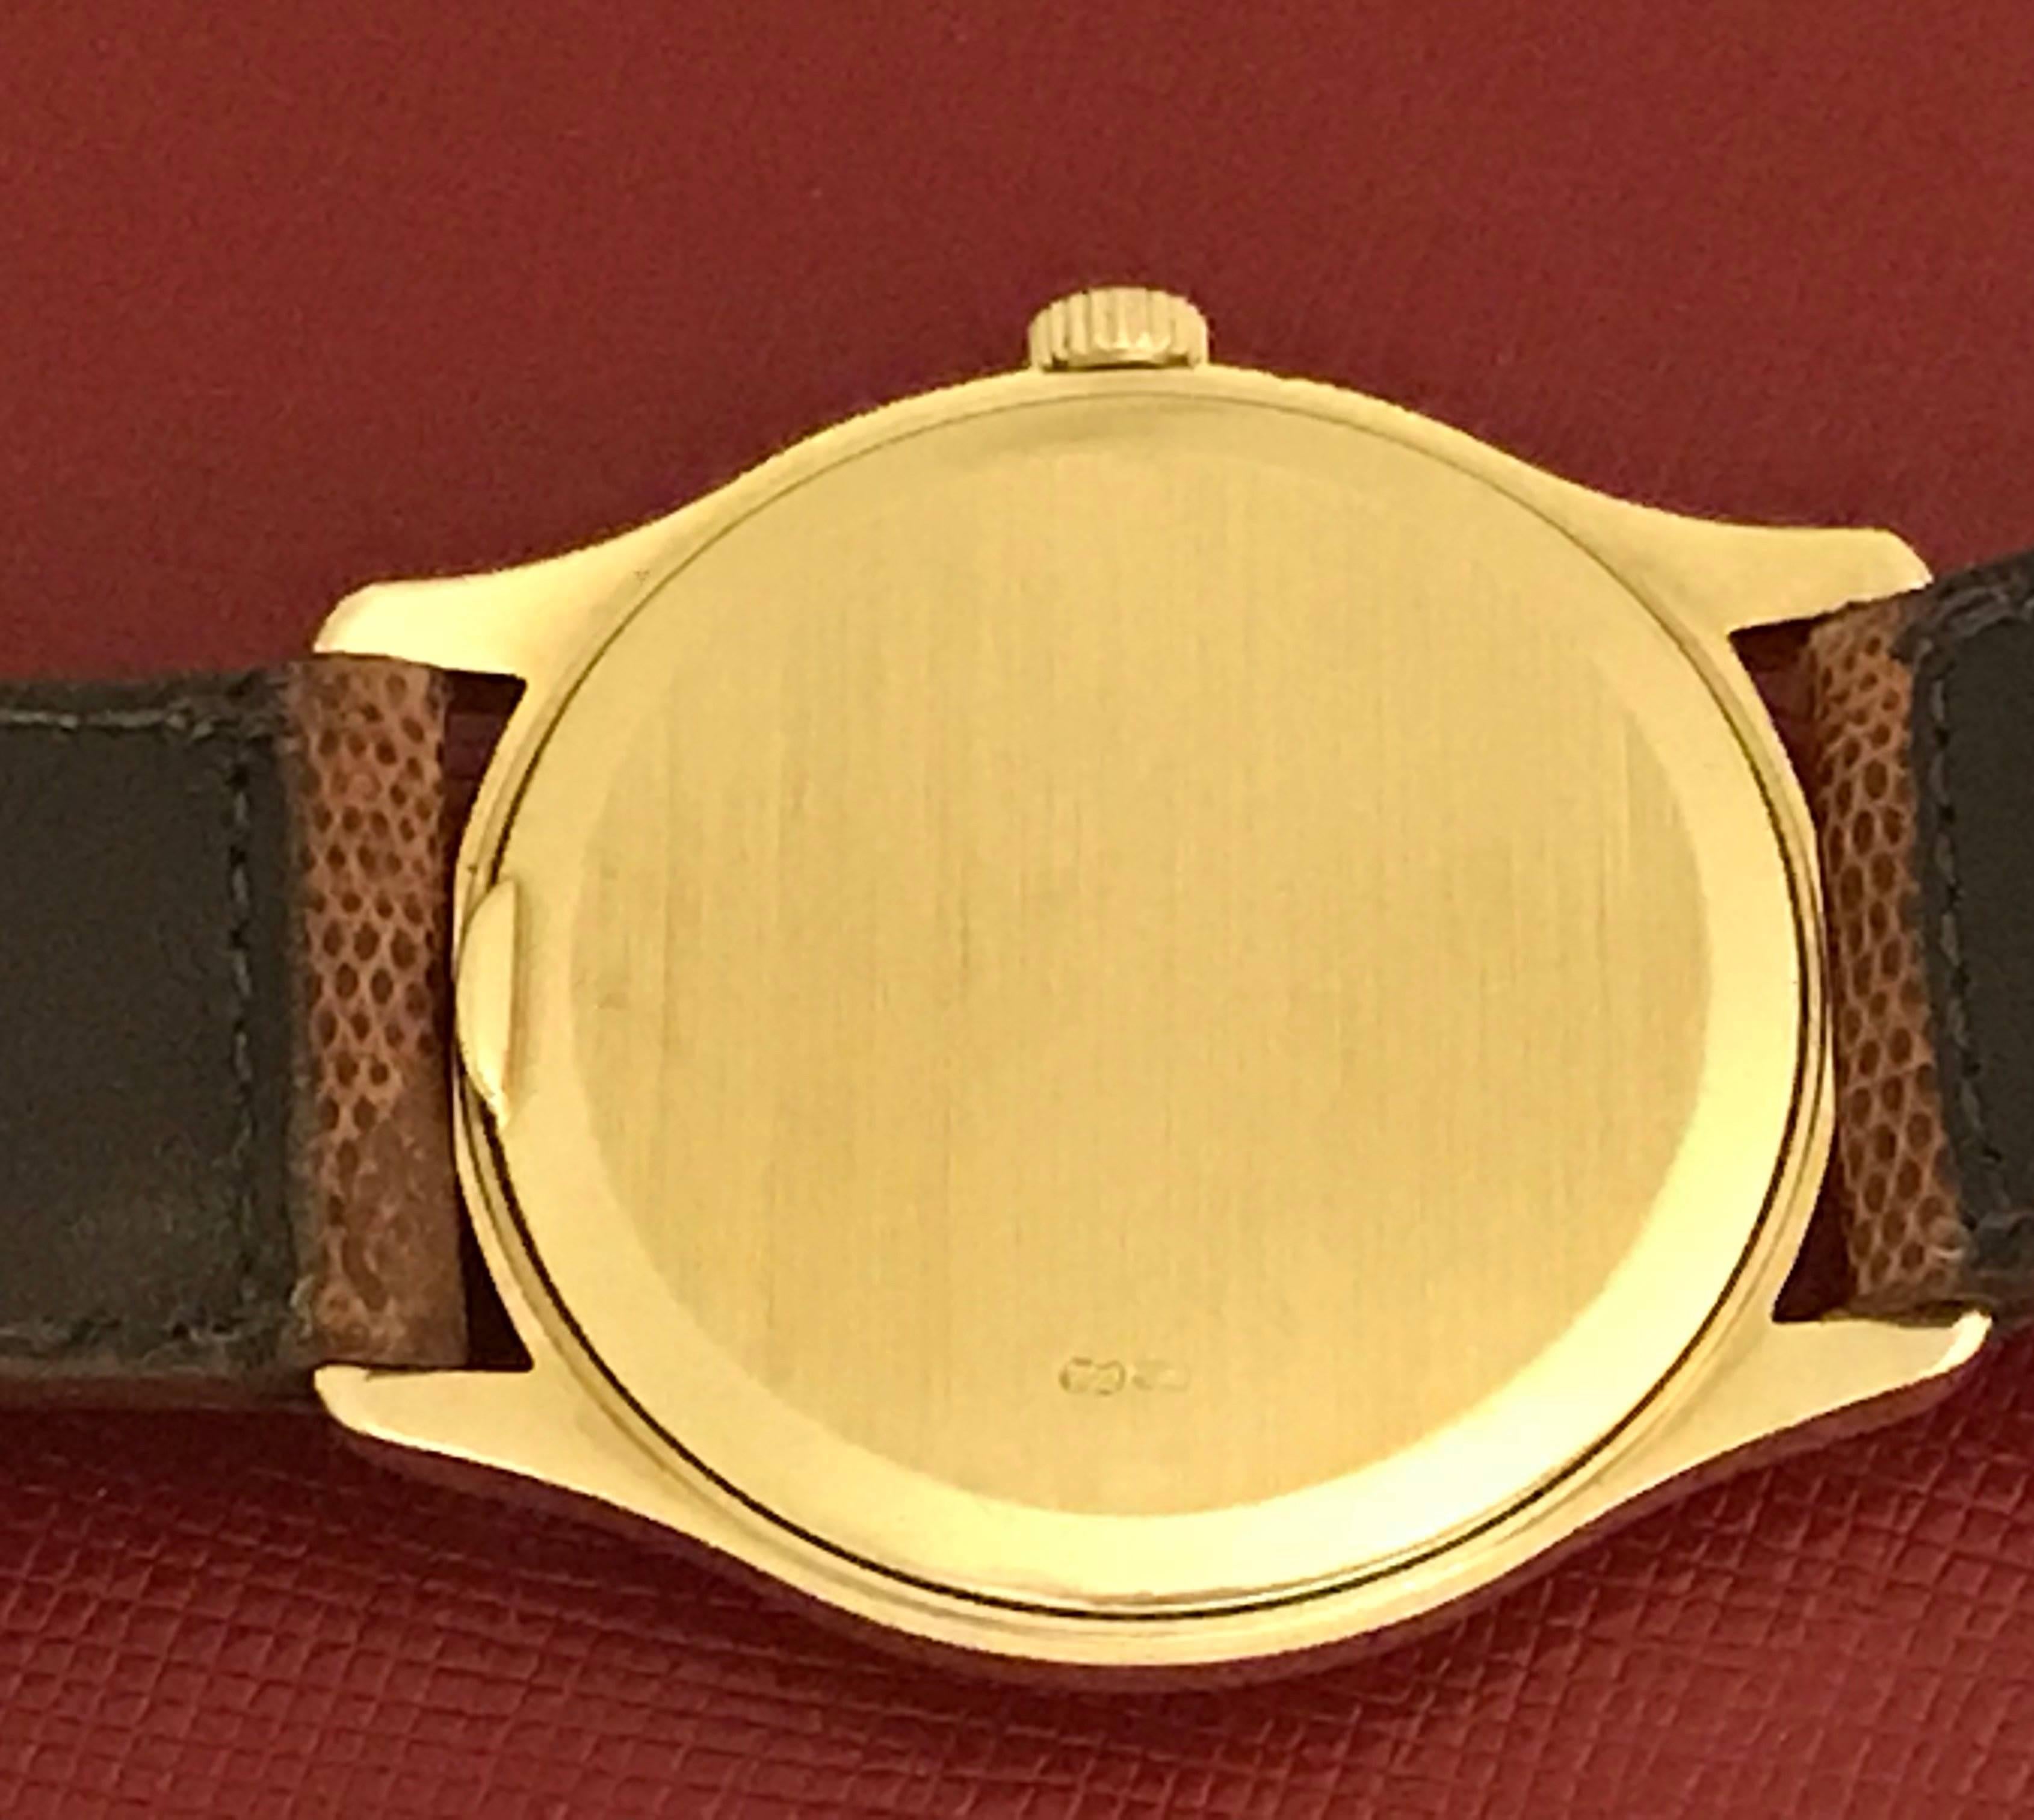 Patek Philippe 18k Yellow Gold Calatrava Manual Wristwatch Ref 3923 1